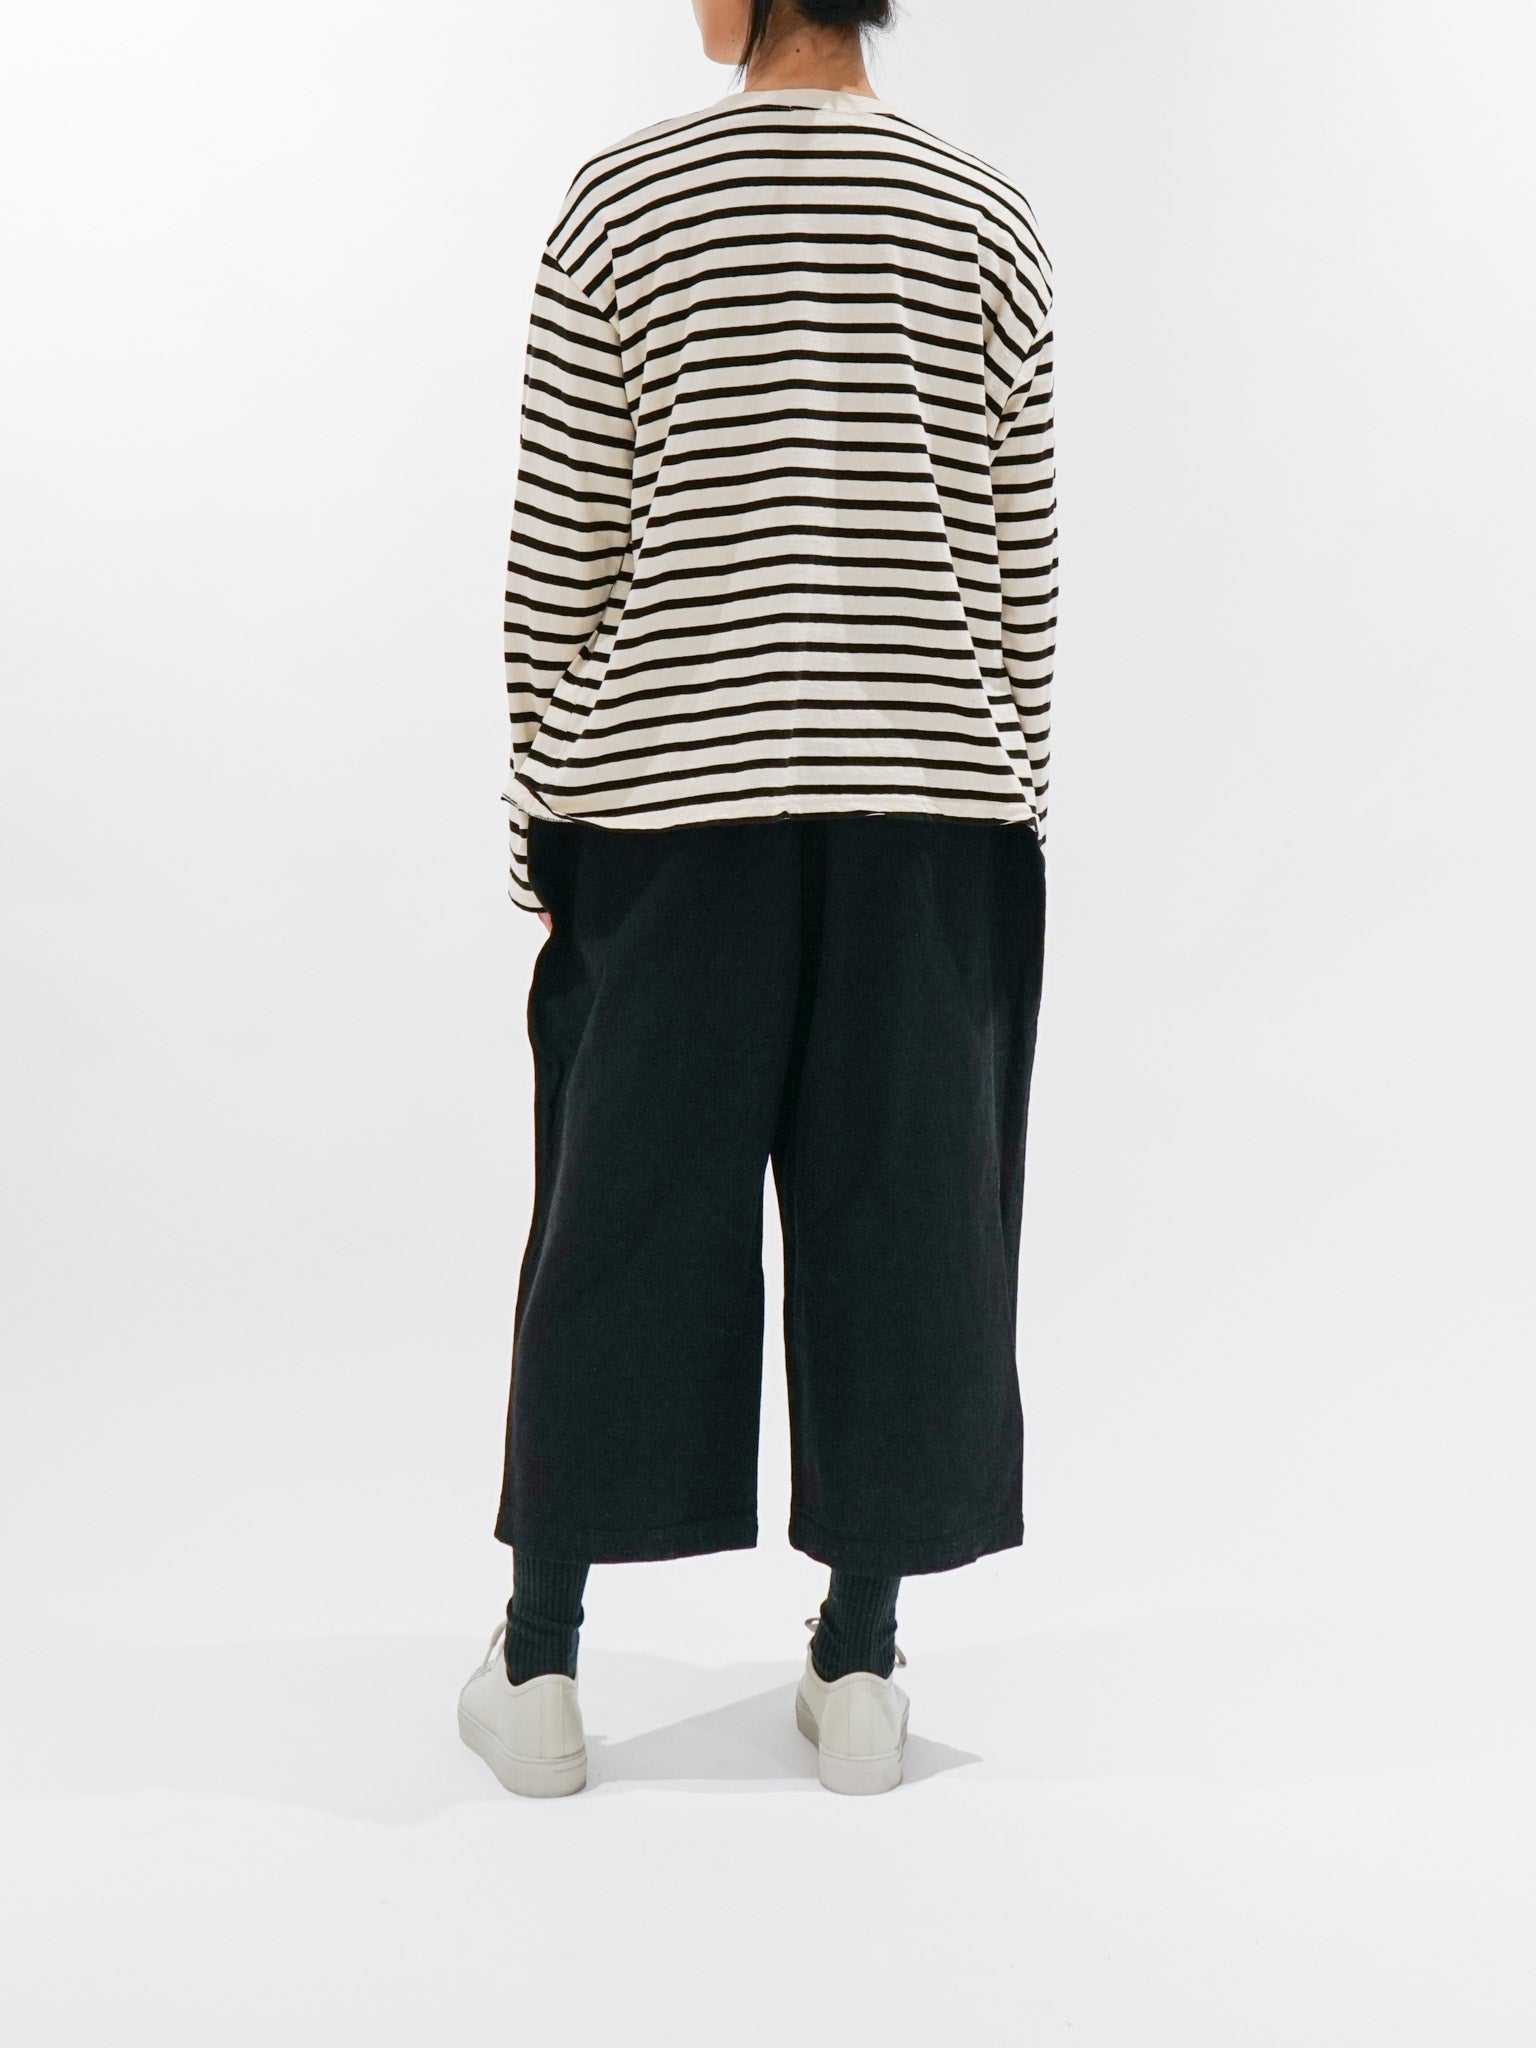 Namu Shop - Ichi Antiquites Striped Pullover Knit - Natural x Black